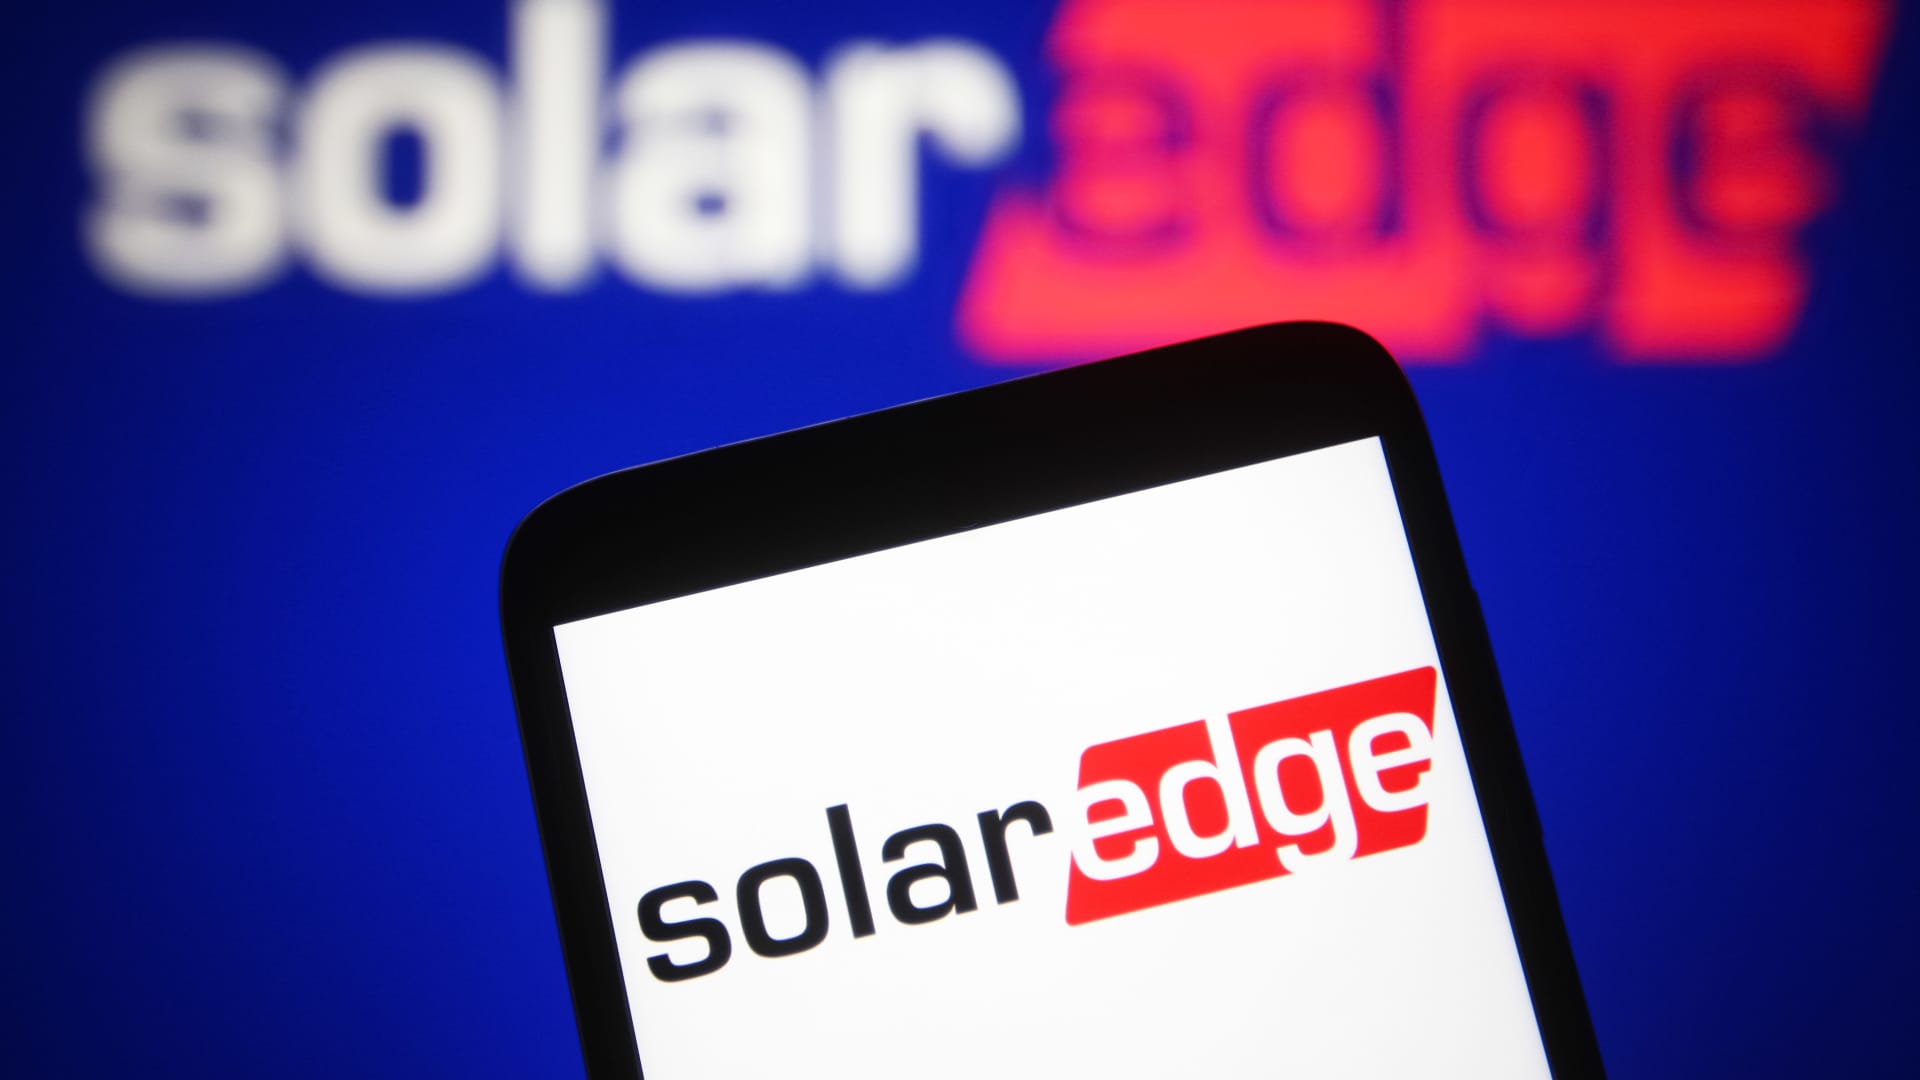 SolarEdge tumbles 18% on weak first quarter guidance